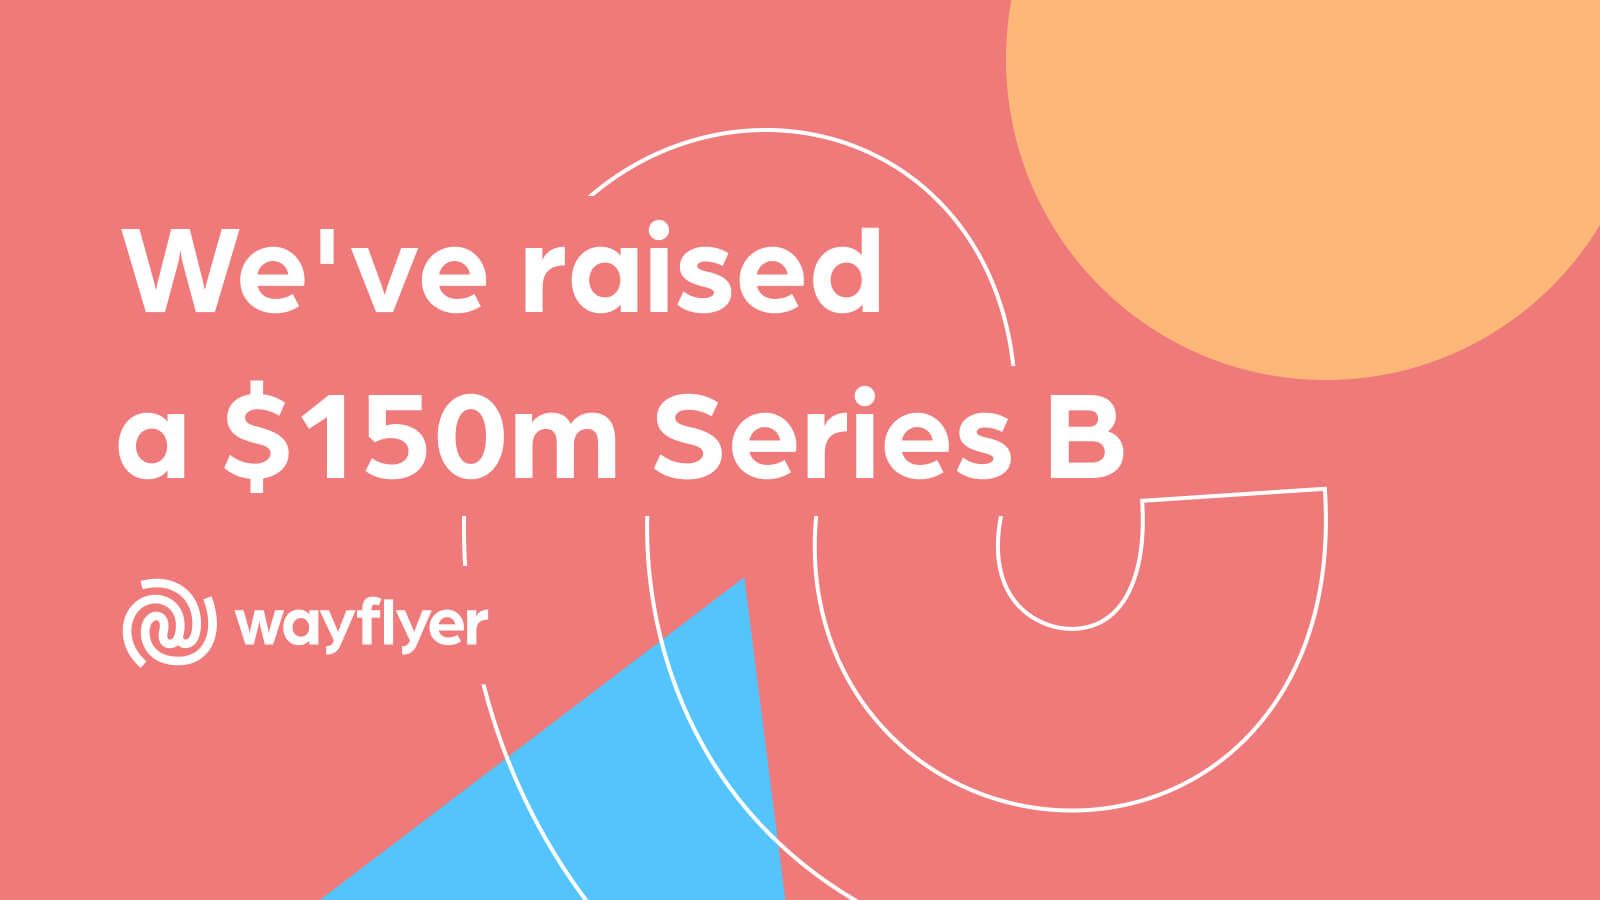 We've raised a $150m Series B